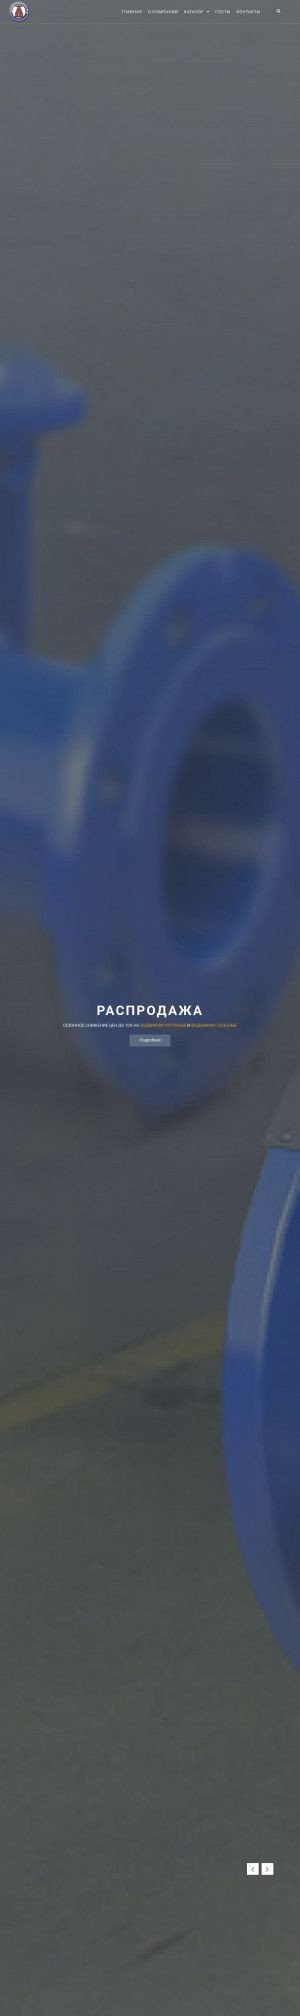 Предпросмотр для zadvigkin.ru — Задвижкин.ру